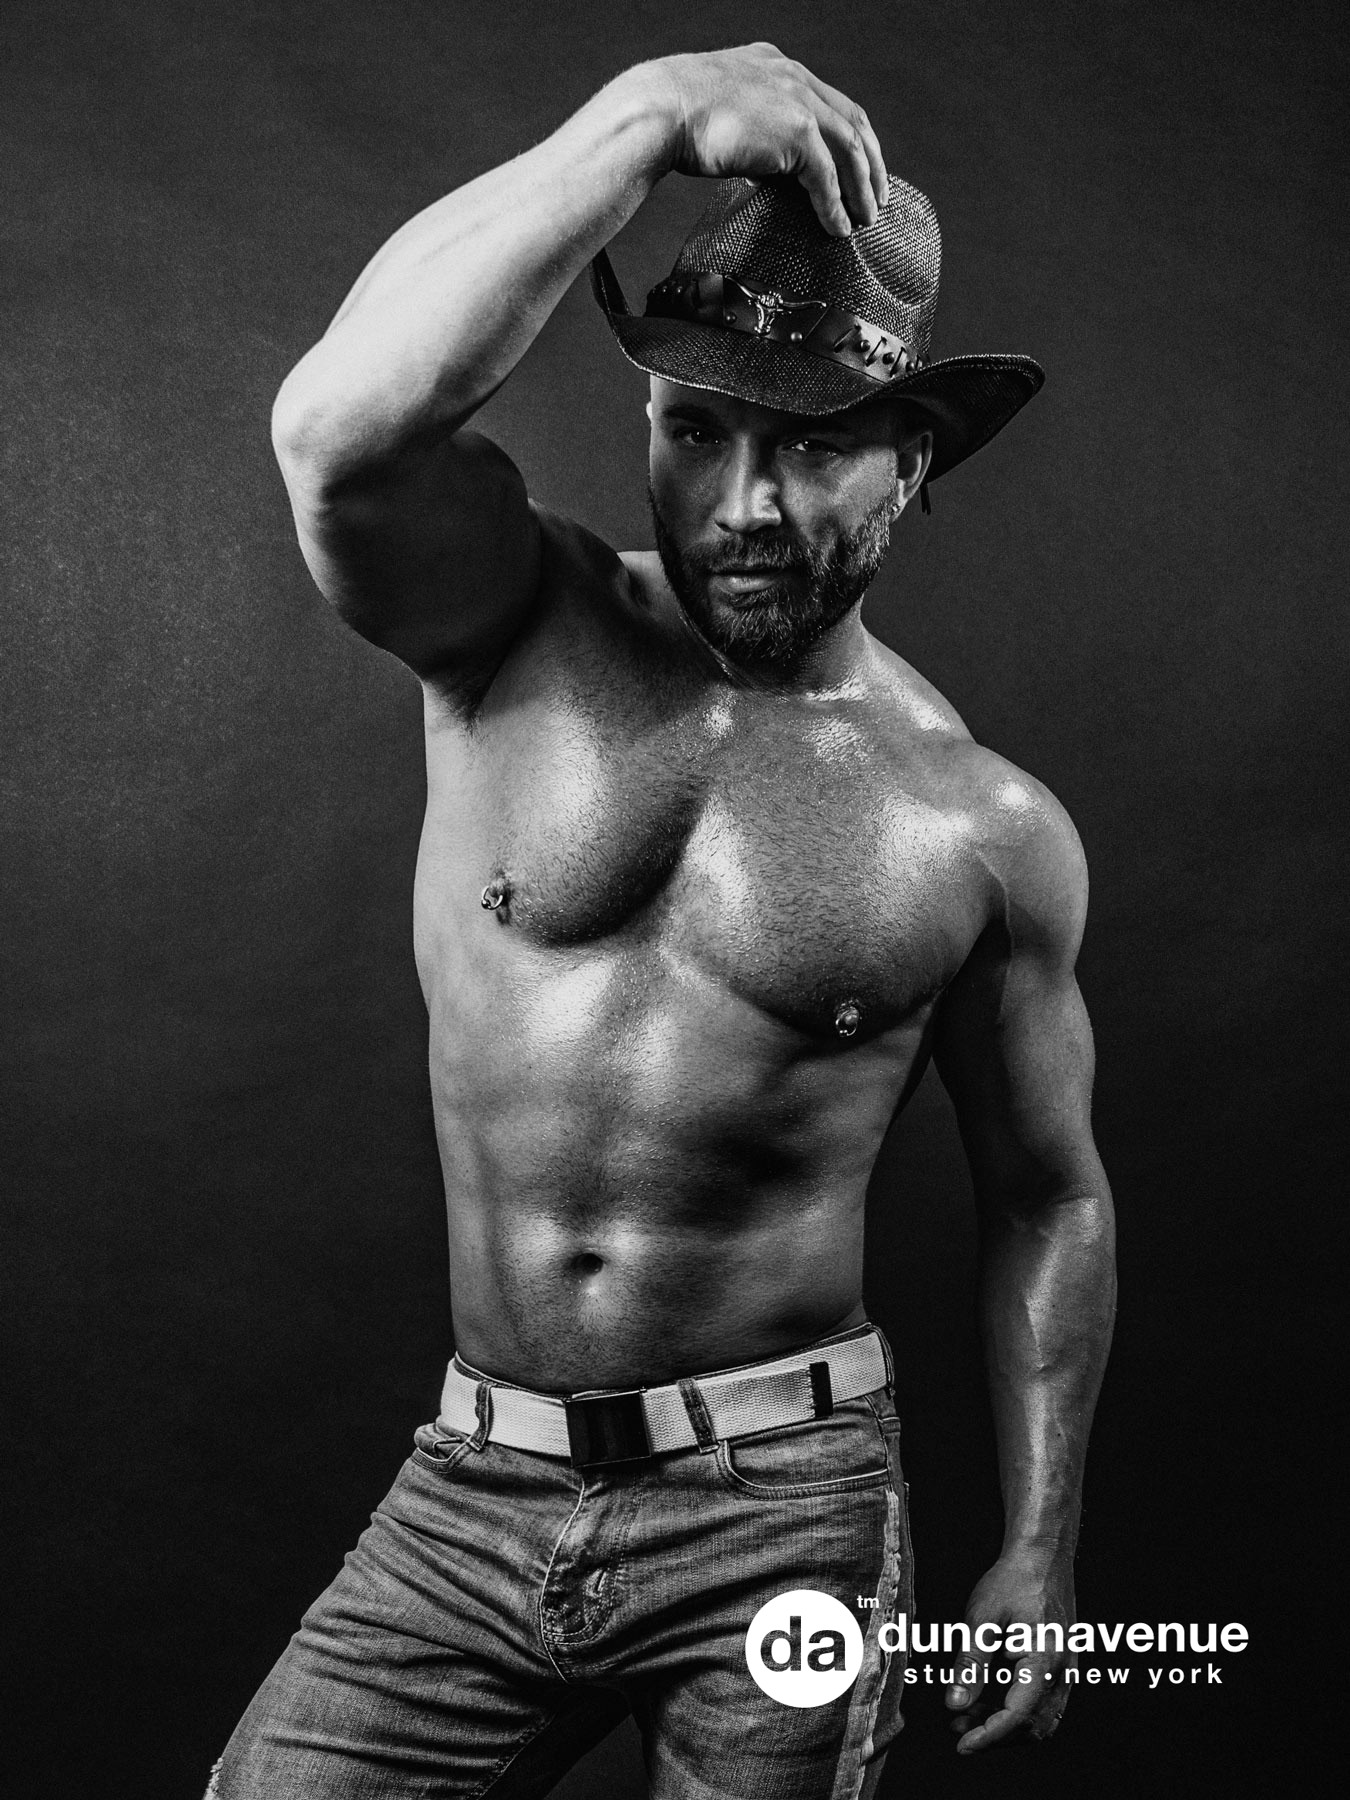 Bodybuilding / Fitness Lifestyle Photography Portfolio – Photographer Maxwell Alexander – New York